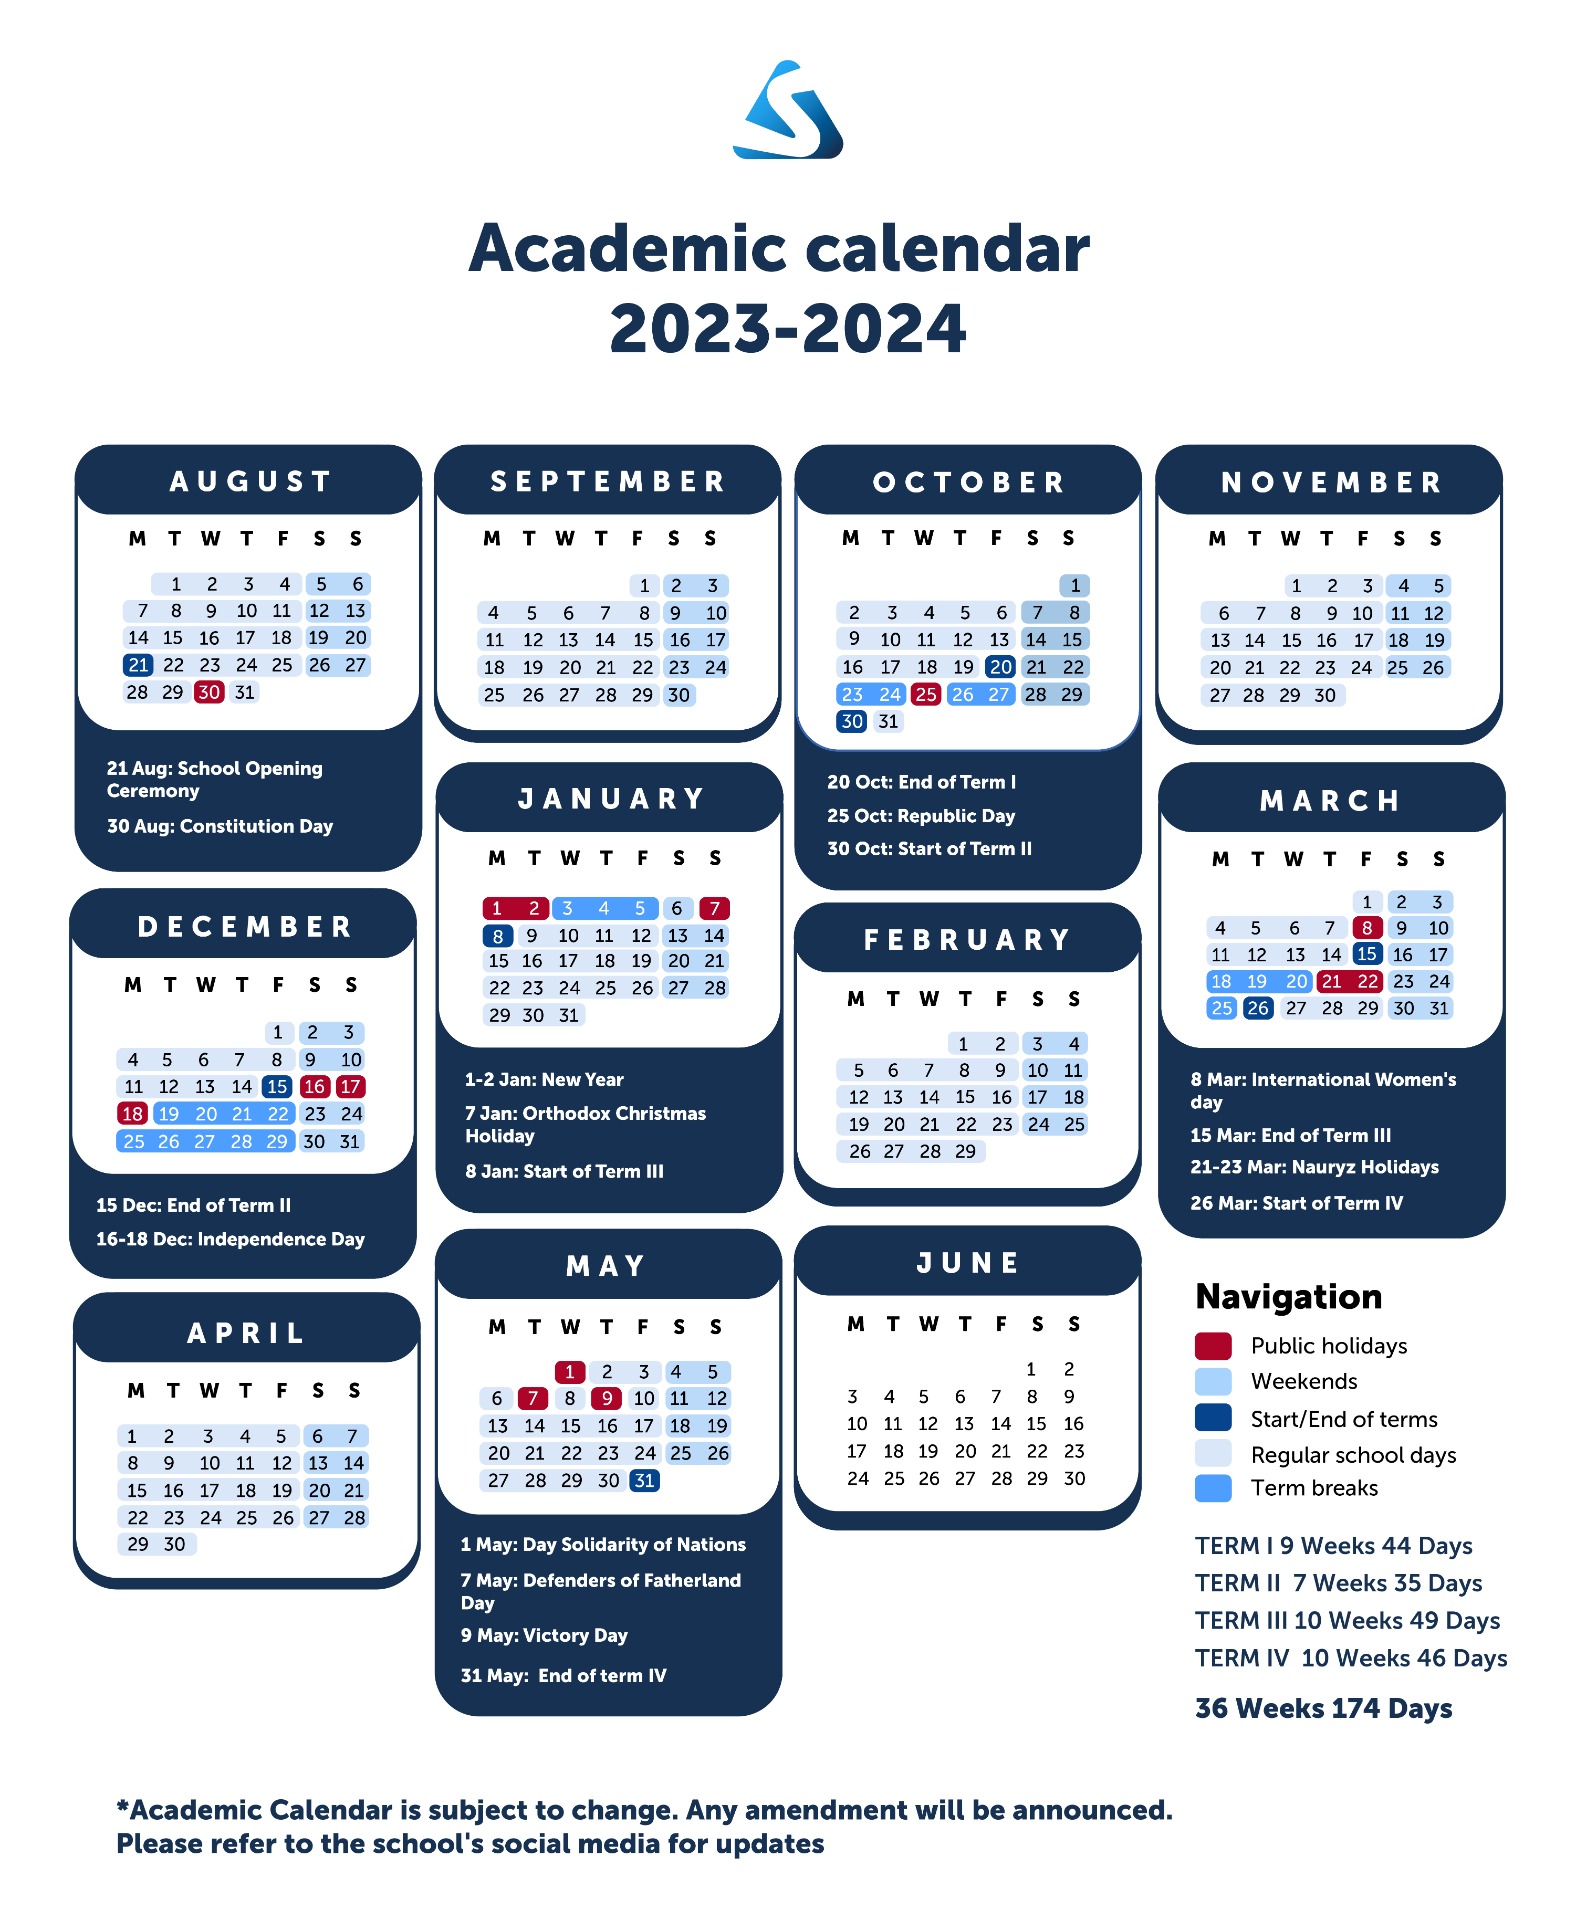 Academic calendar 2023-2024 - Image 1